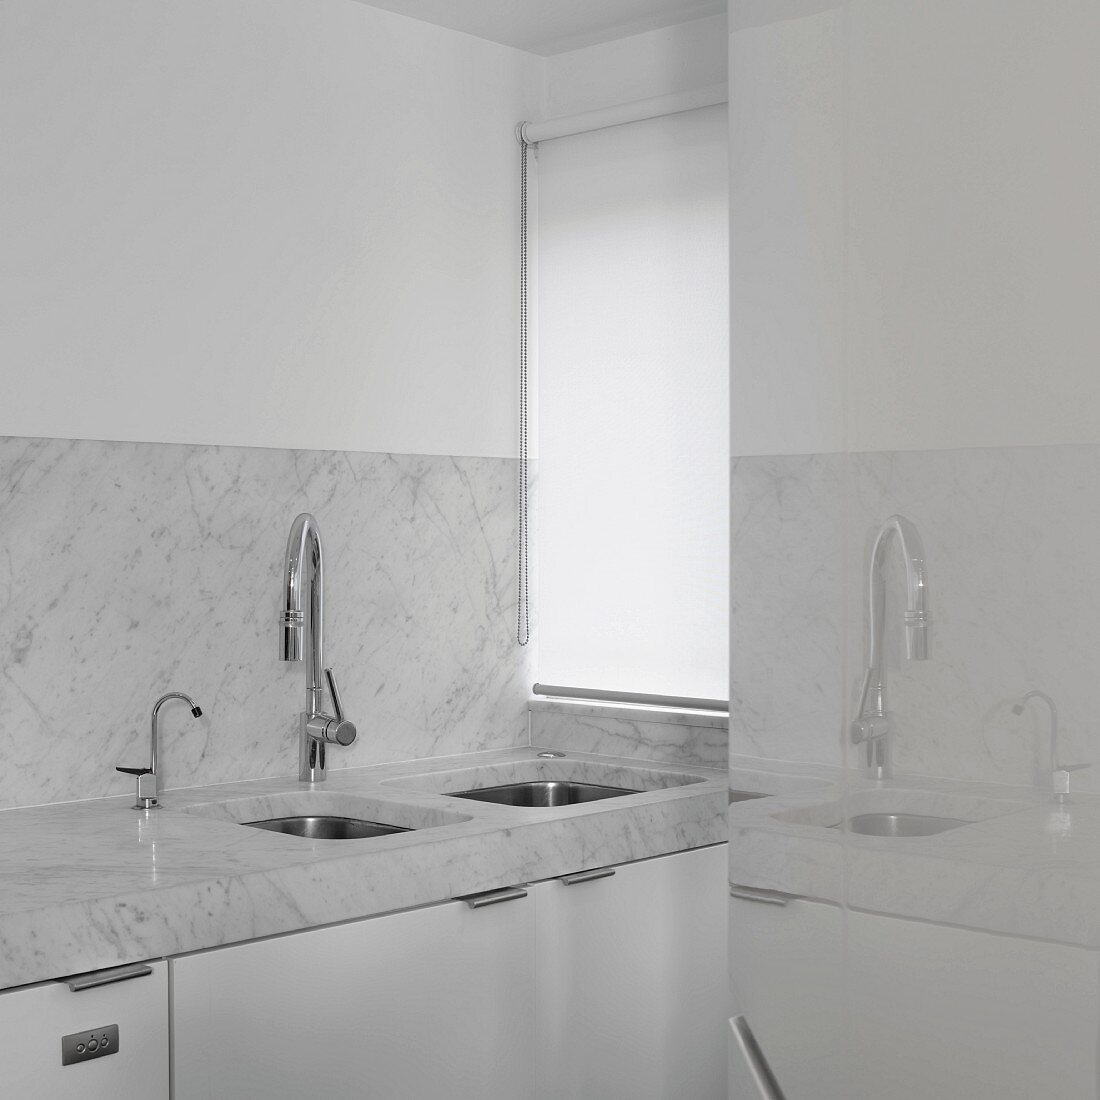 Sink in grey and white kitchen